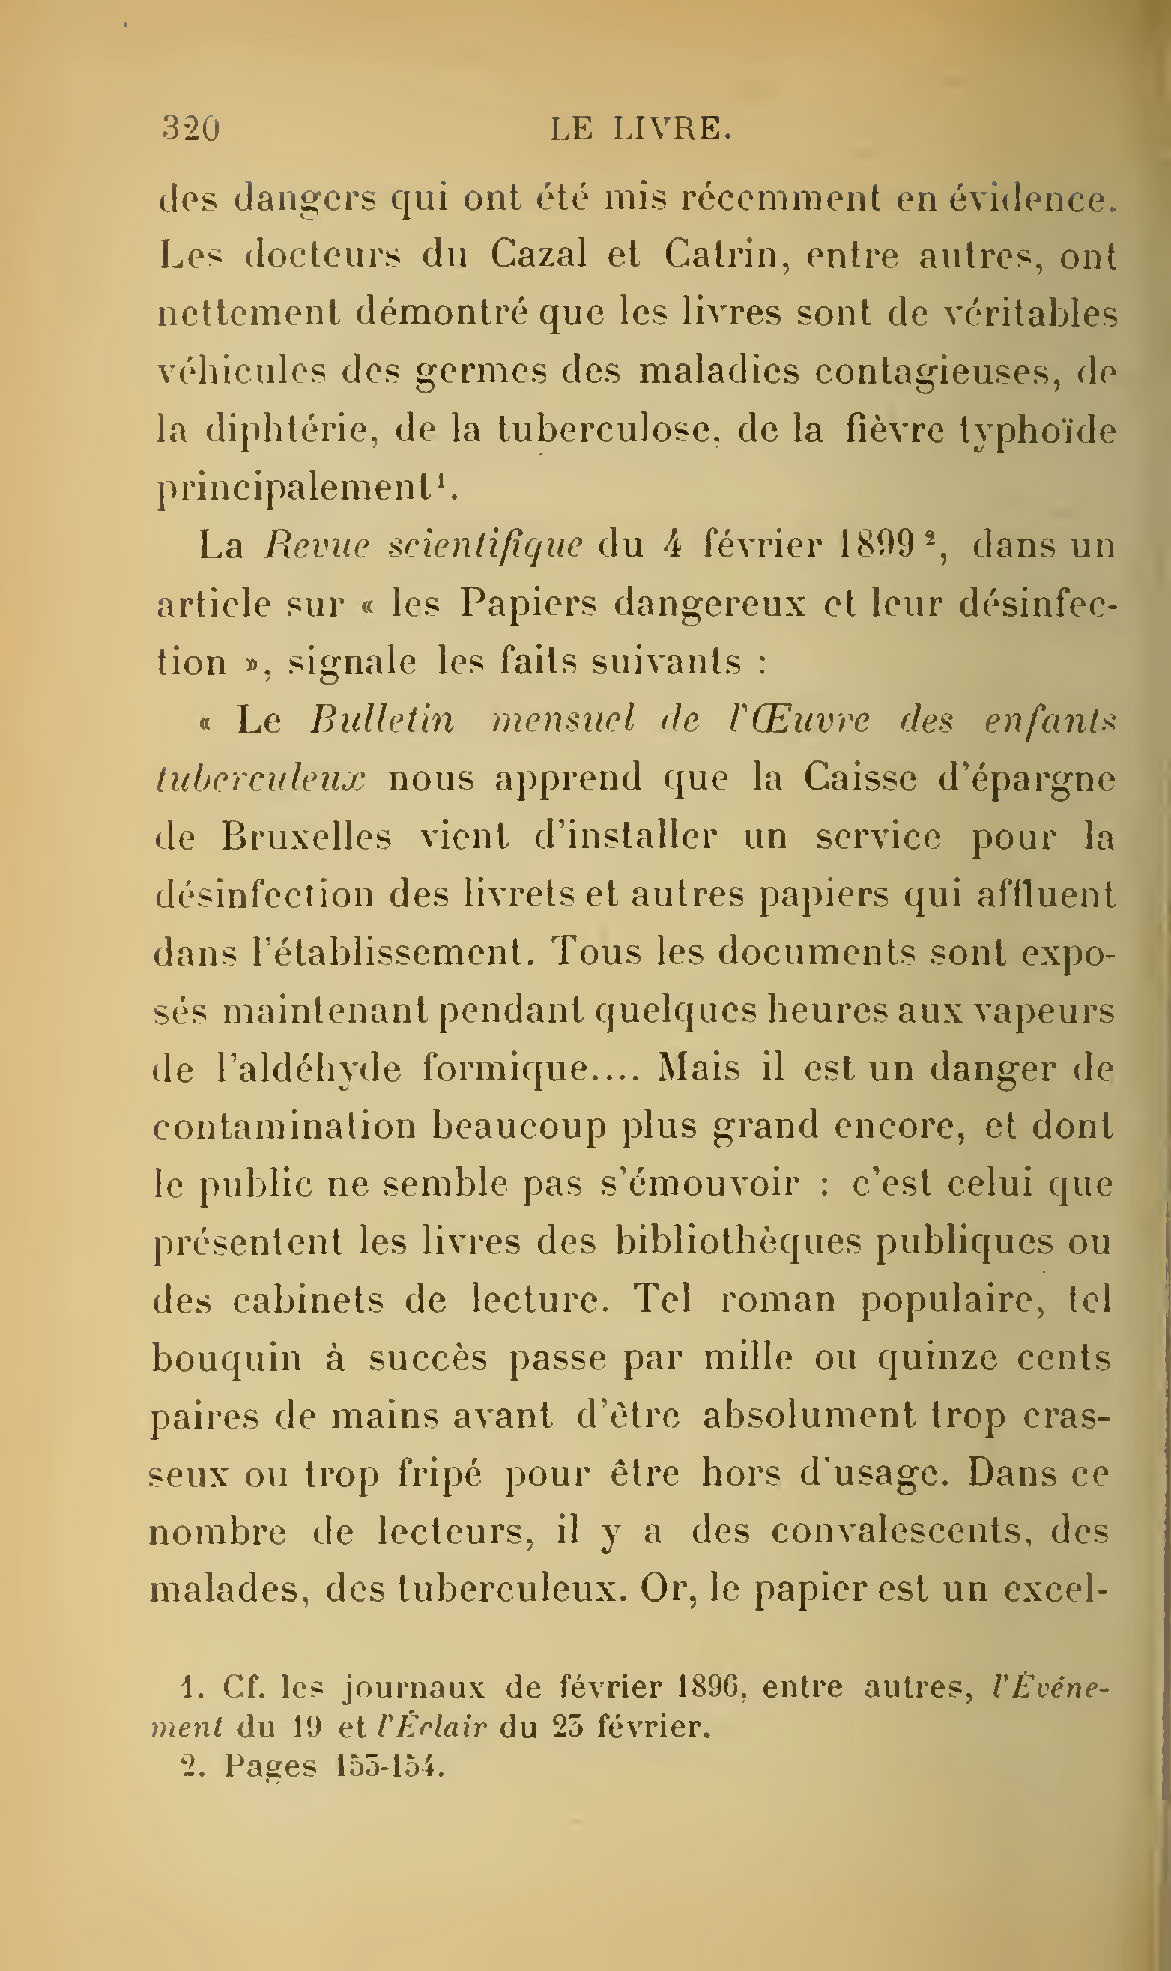 Albert Cim, Le Livre, t. II, p. 320.